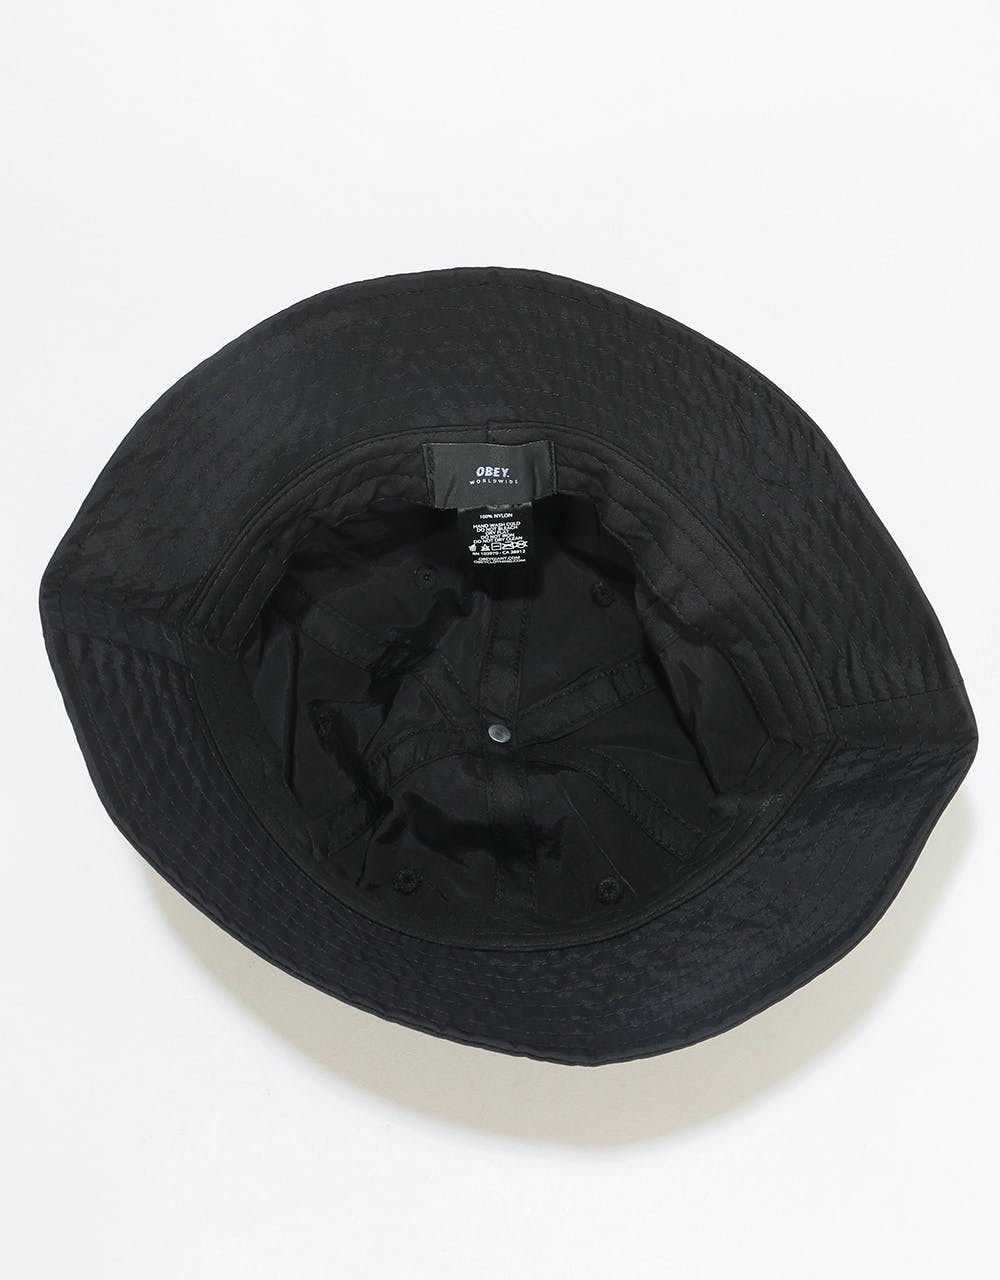 Obey Frederick Bucket Hat - Black